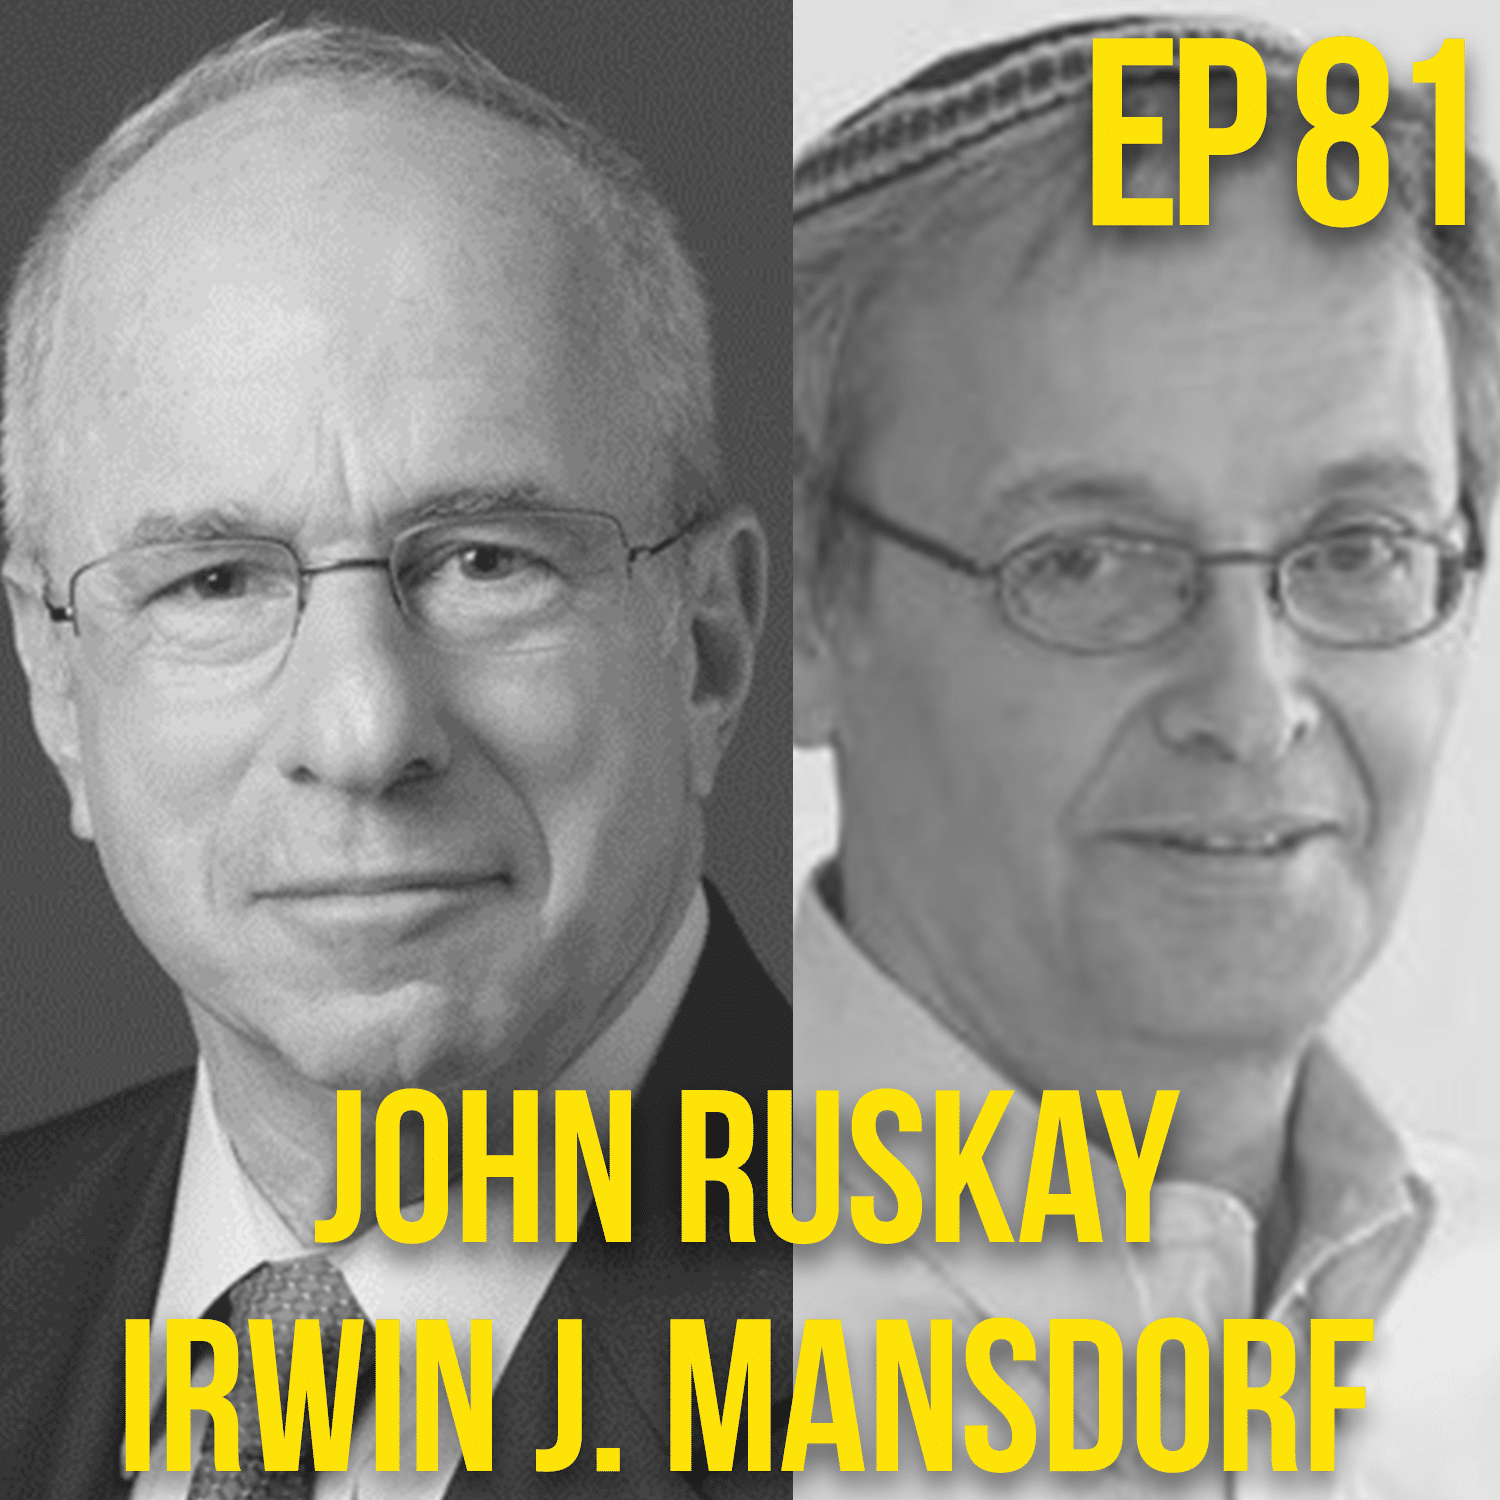 John Ruskay and Irwin J. Mansdorf